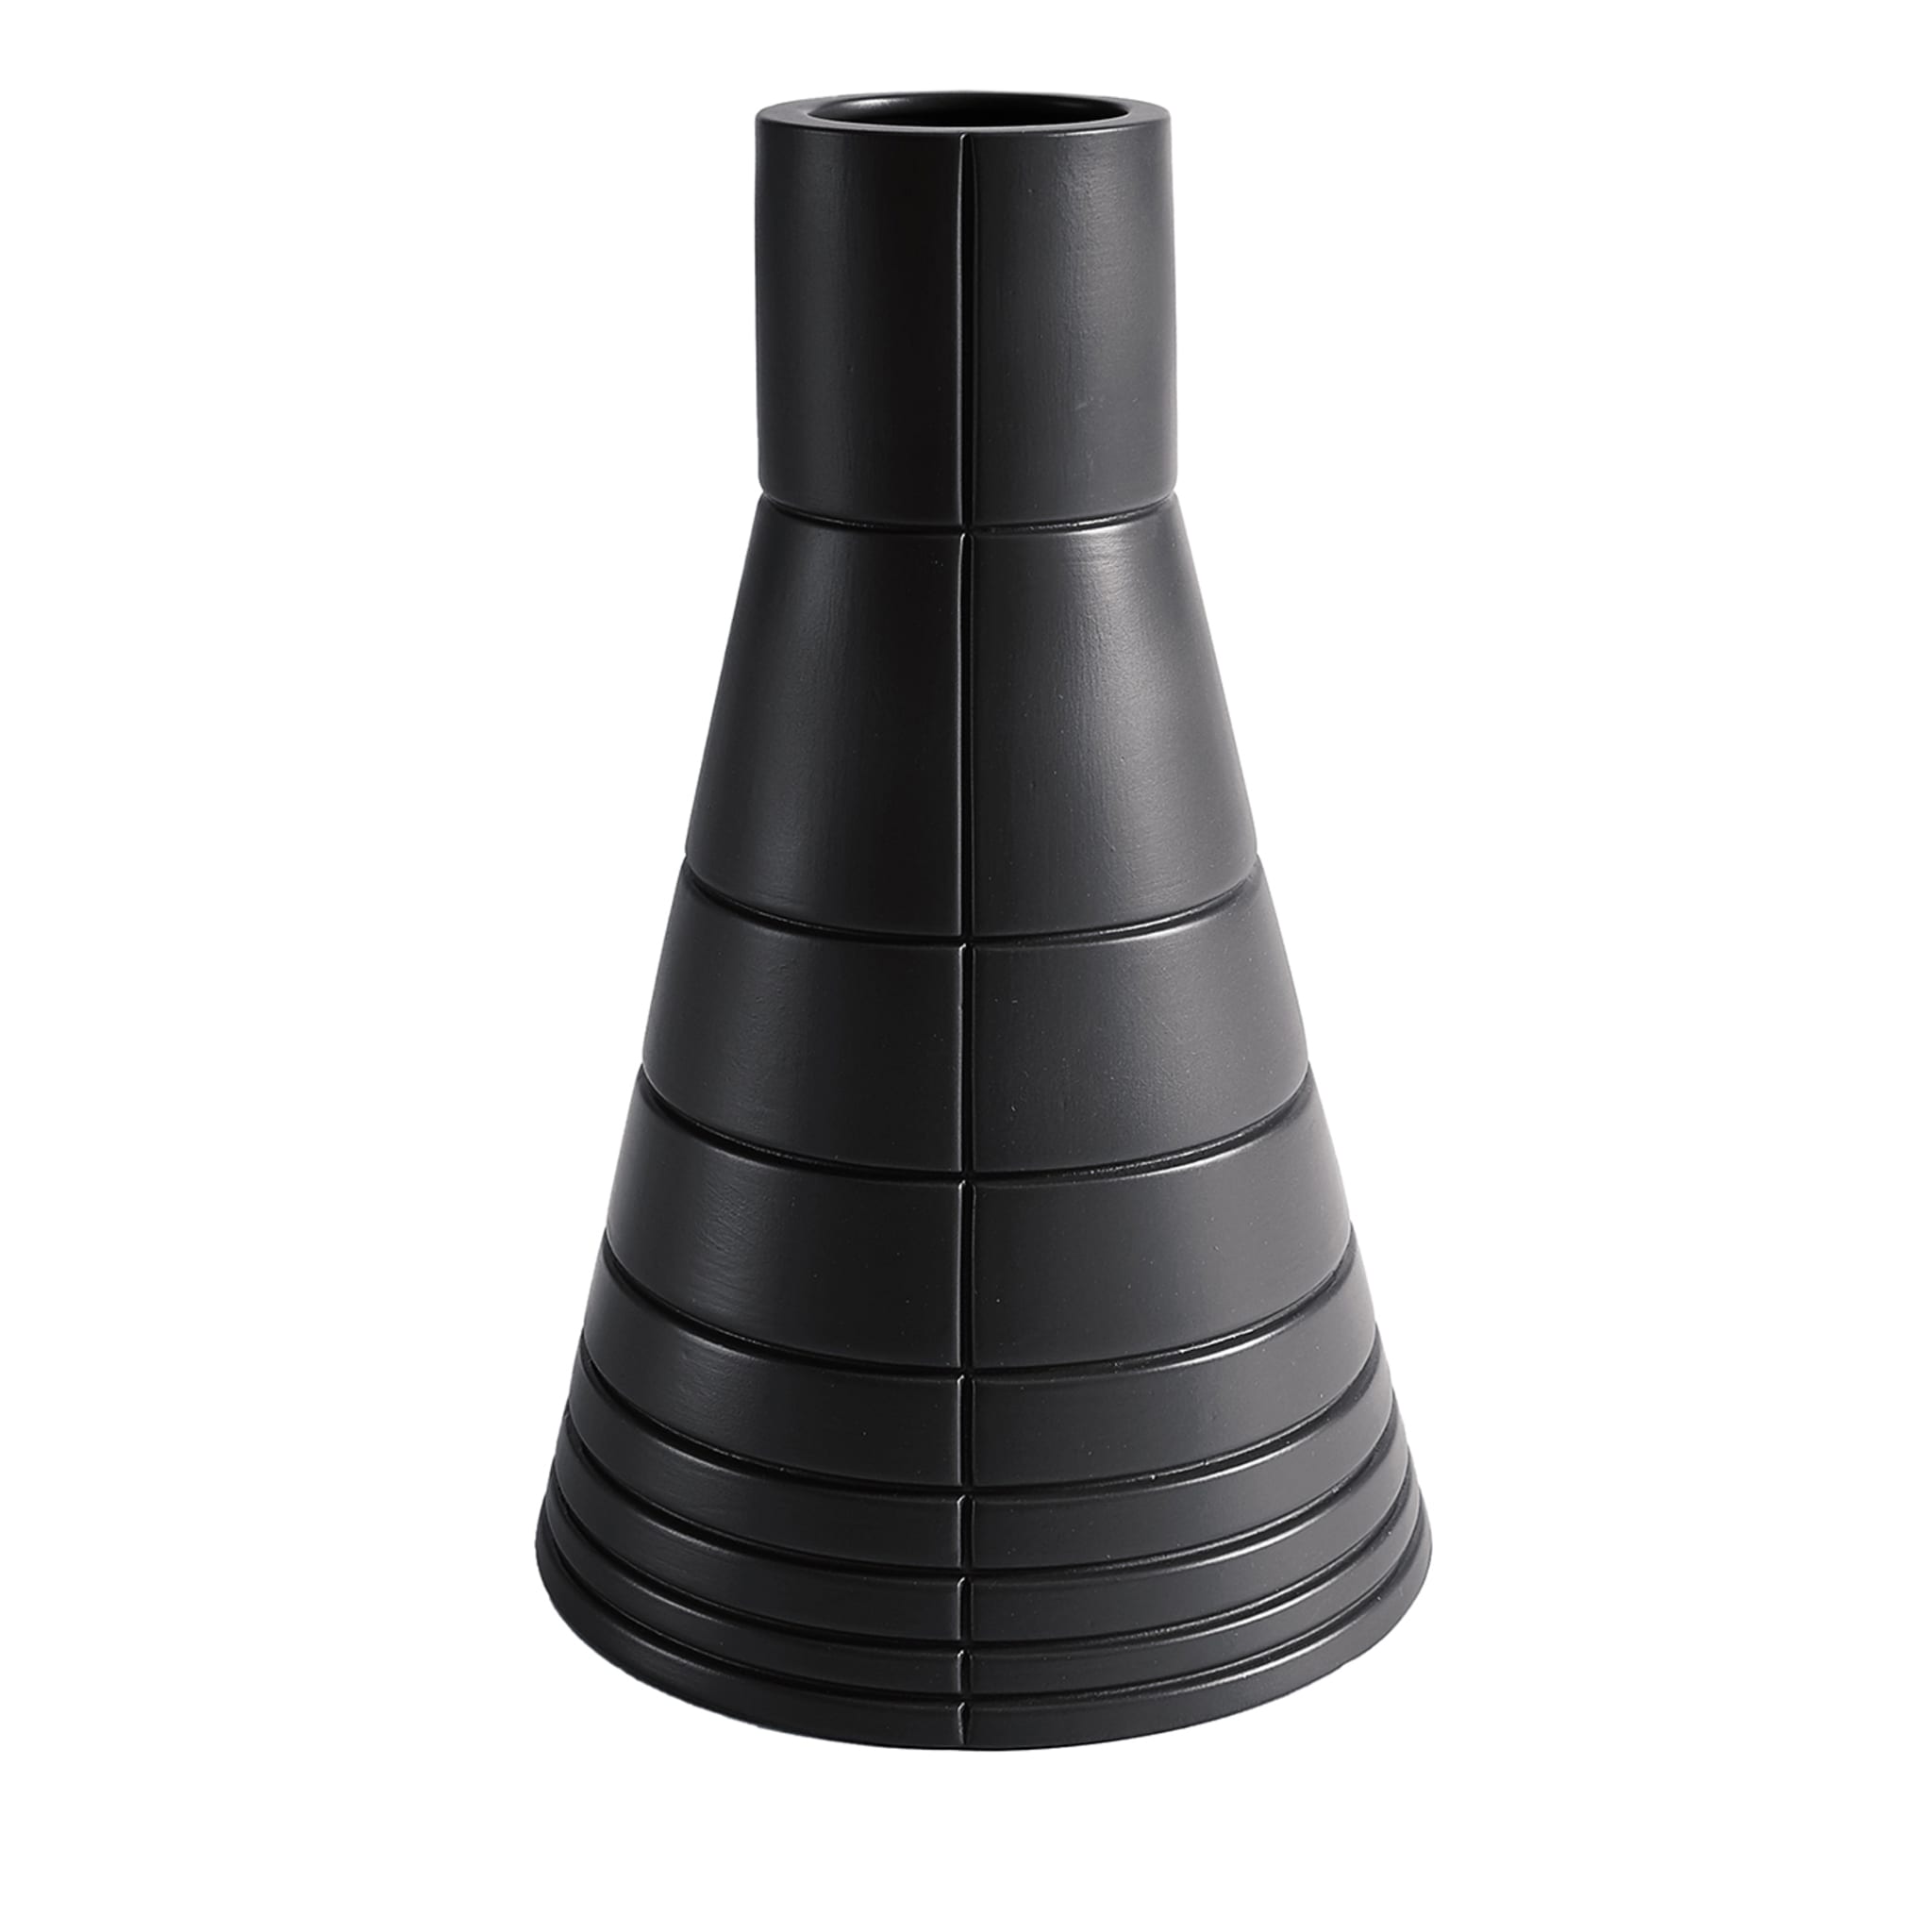 Rikuadra Black Ceramic Vase #5 - Main view